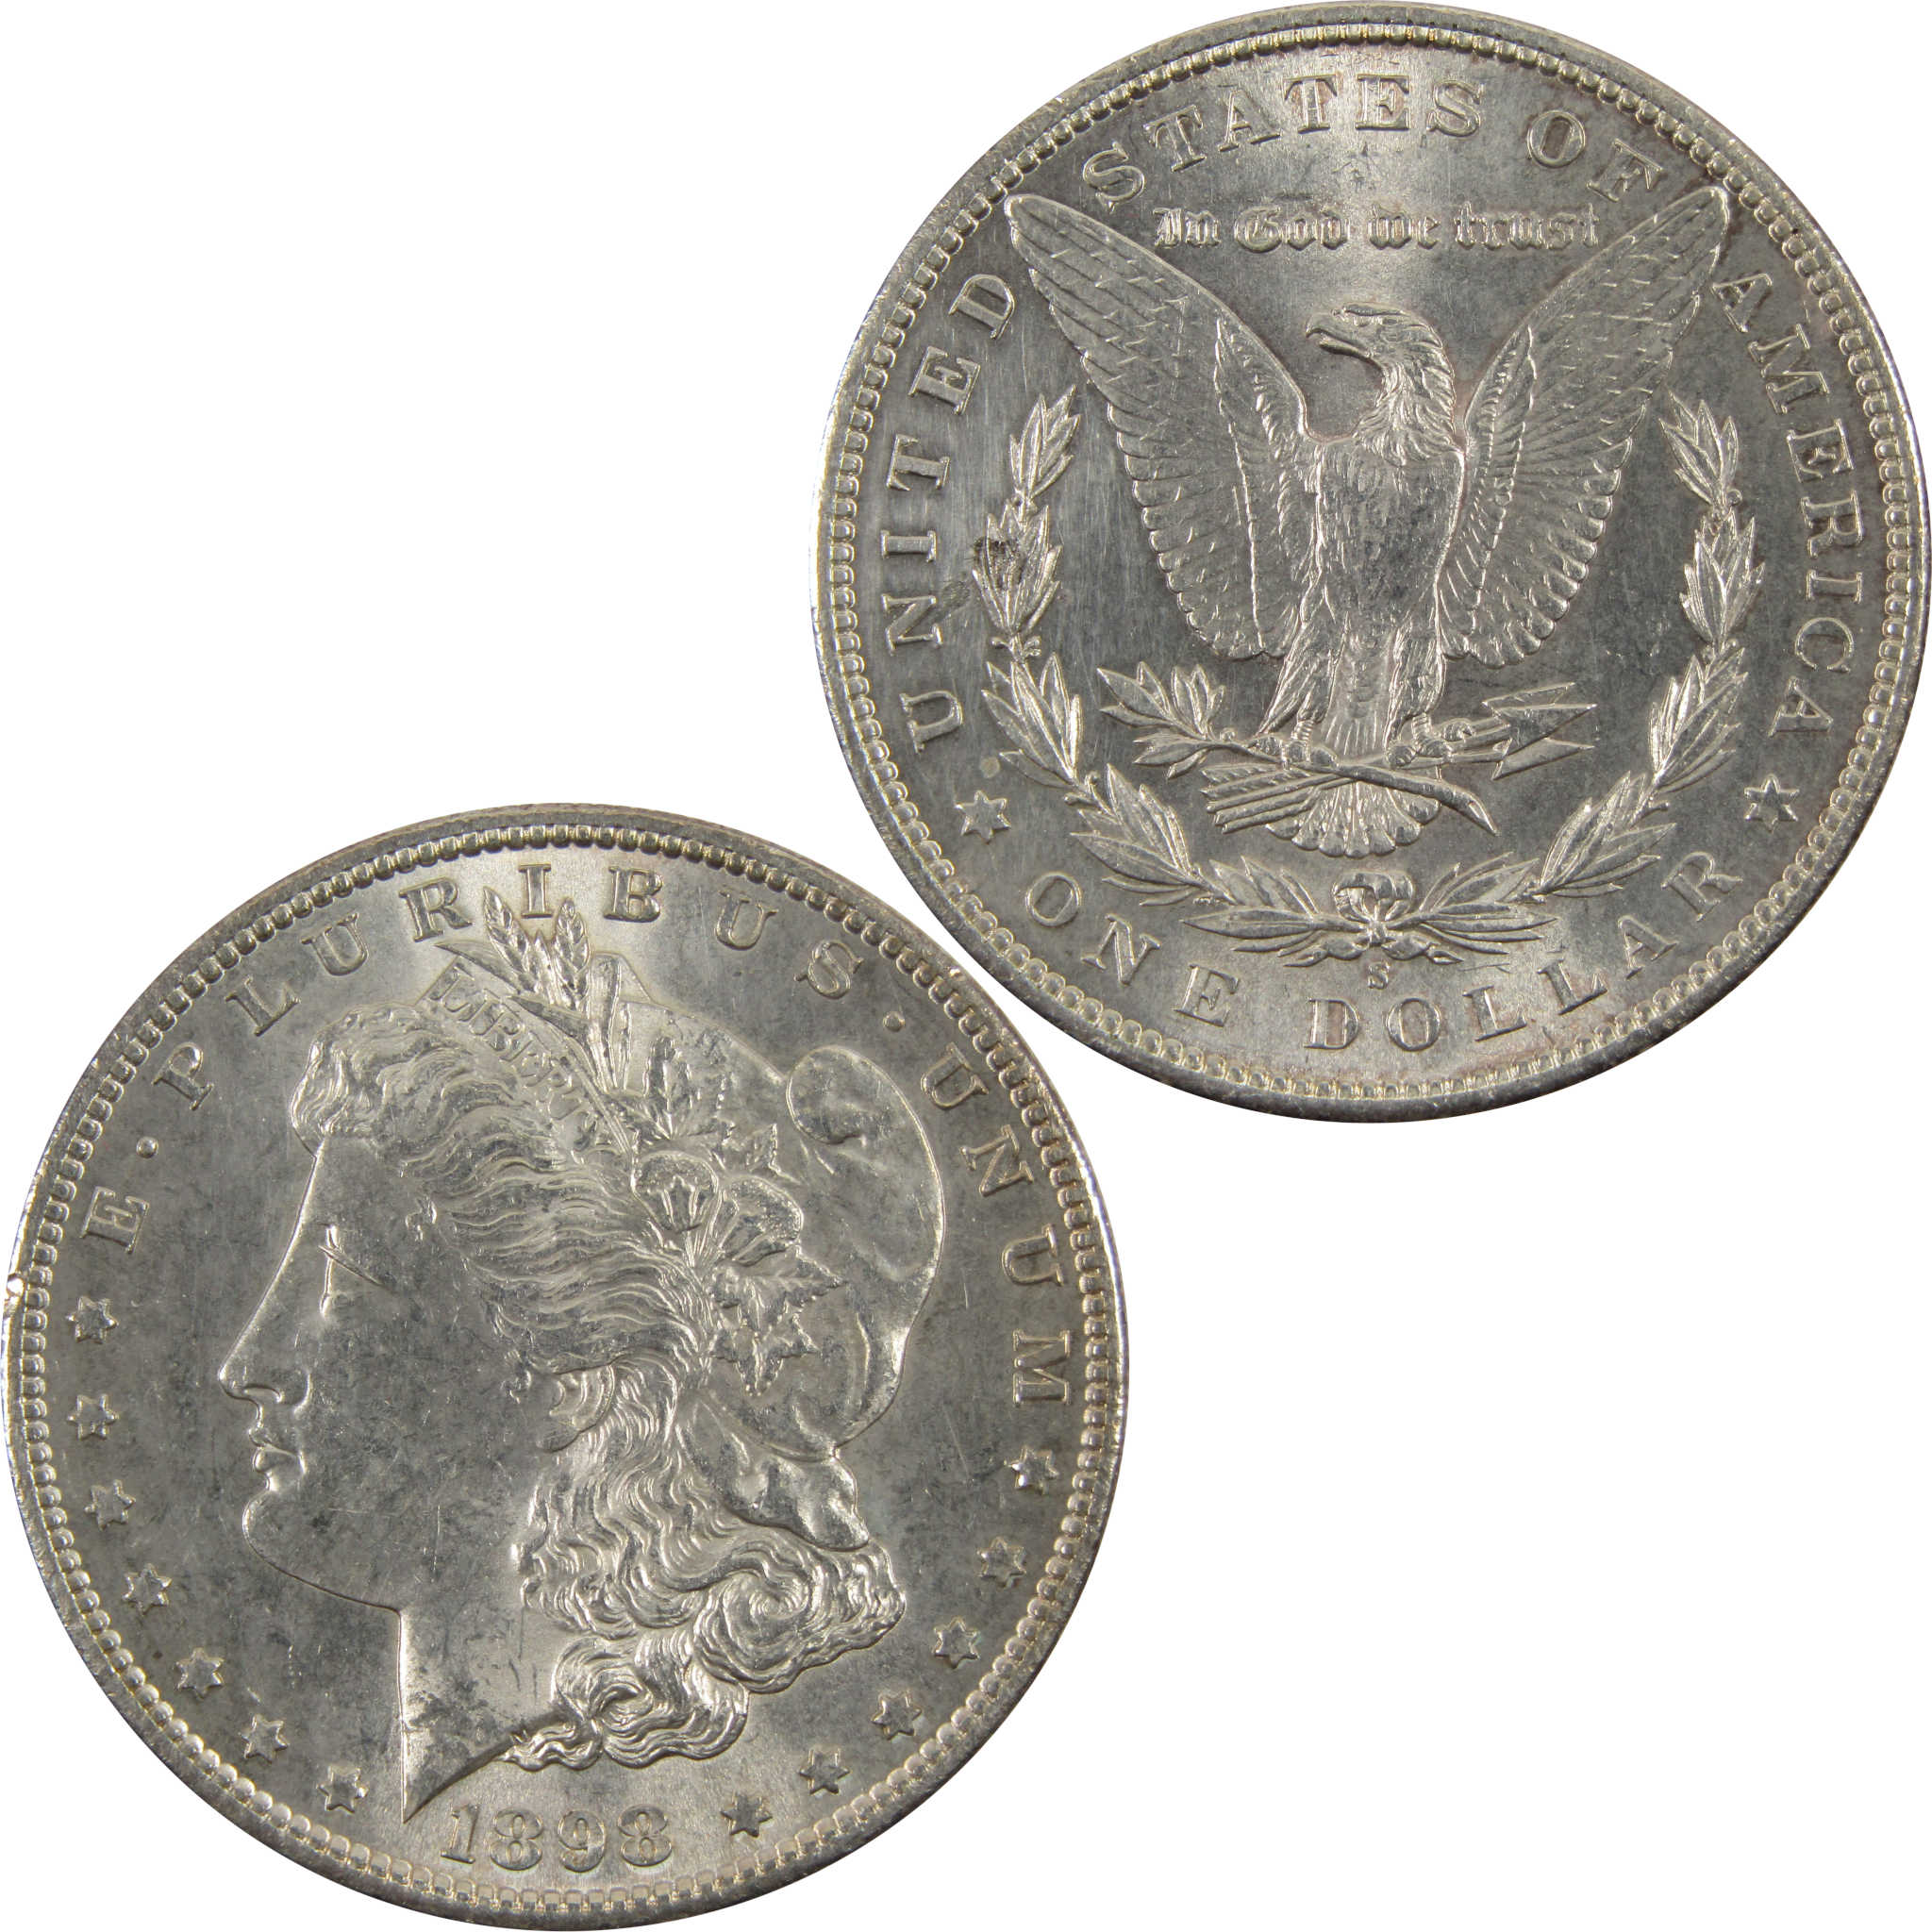 1898 S Morgan Dollar BU Uncirculated 90% Silver $1 Coin SKU:I7679 - Morgan coin - Morgan silver dollar - Morgan silver dollar for sale - Profile Coins &amp; Collectibles